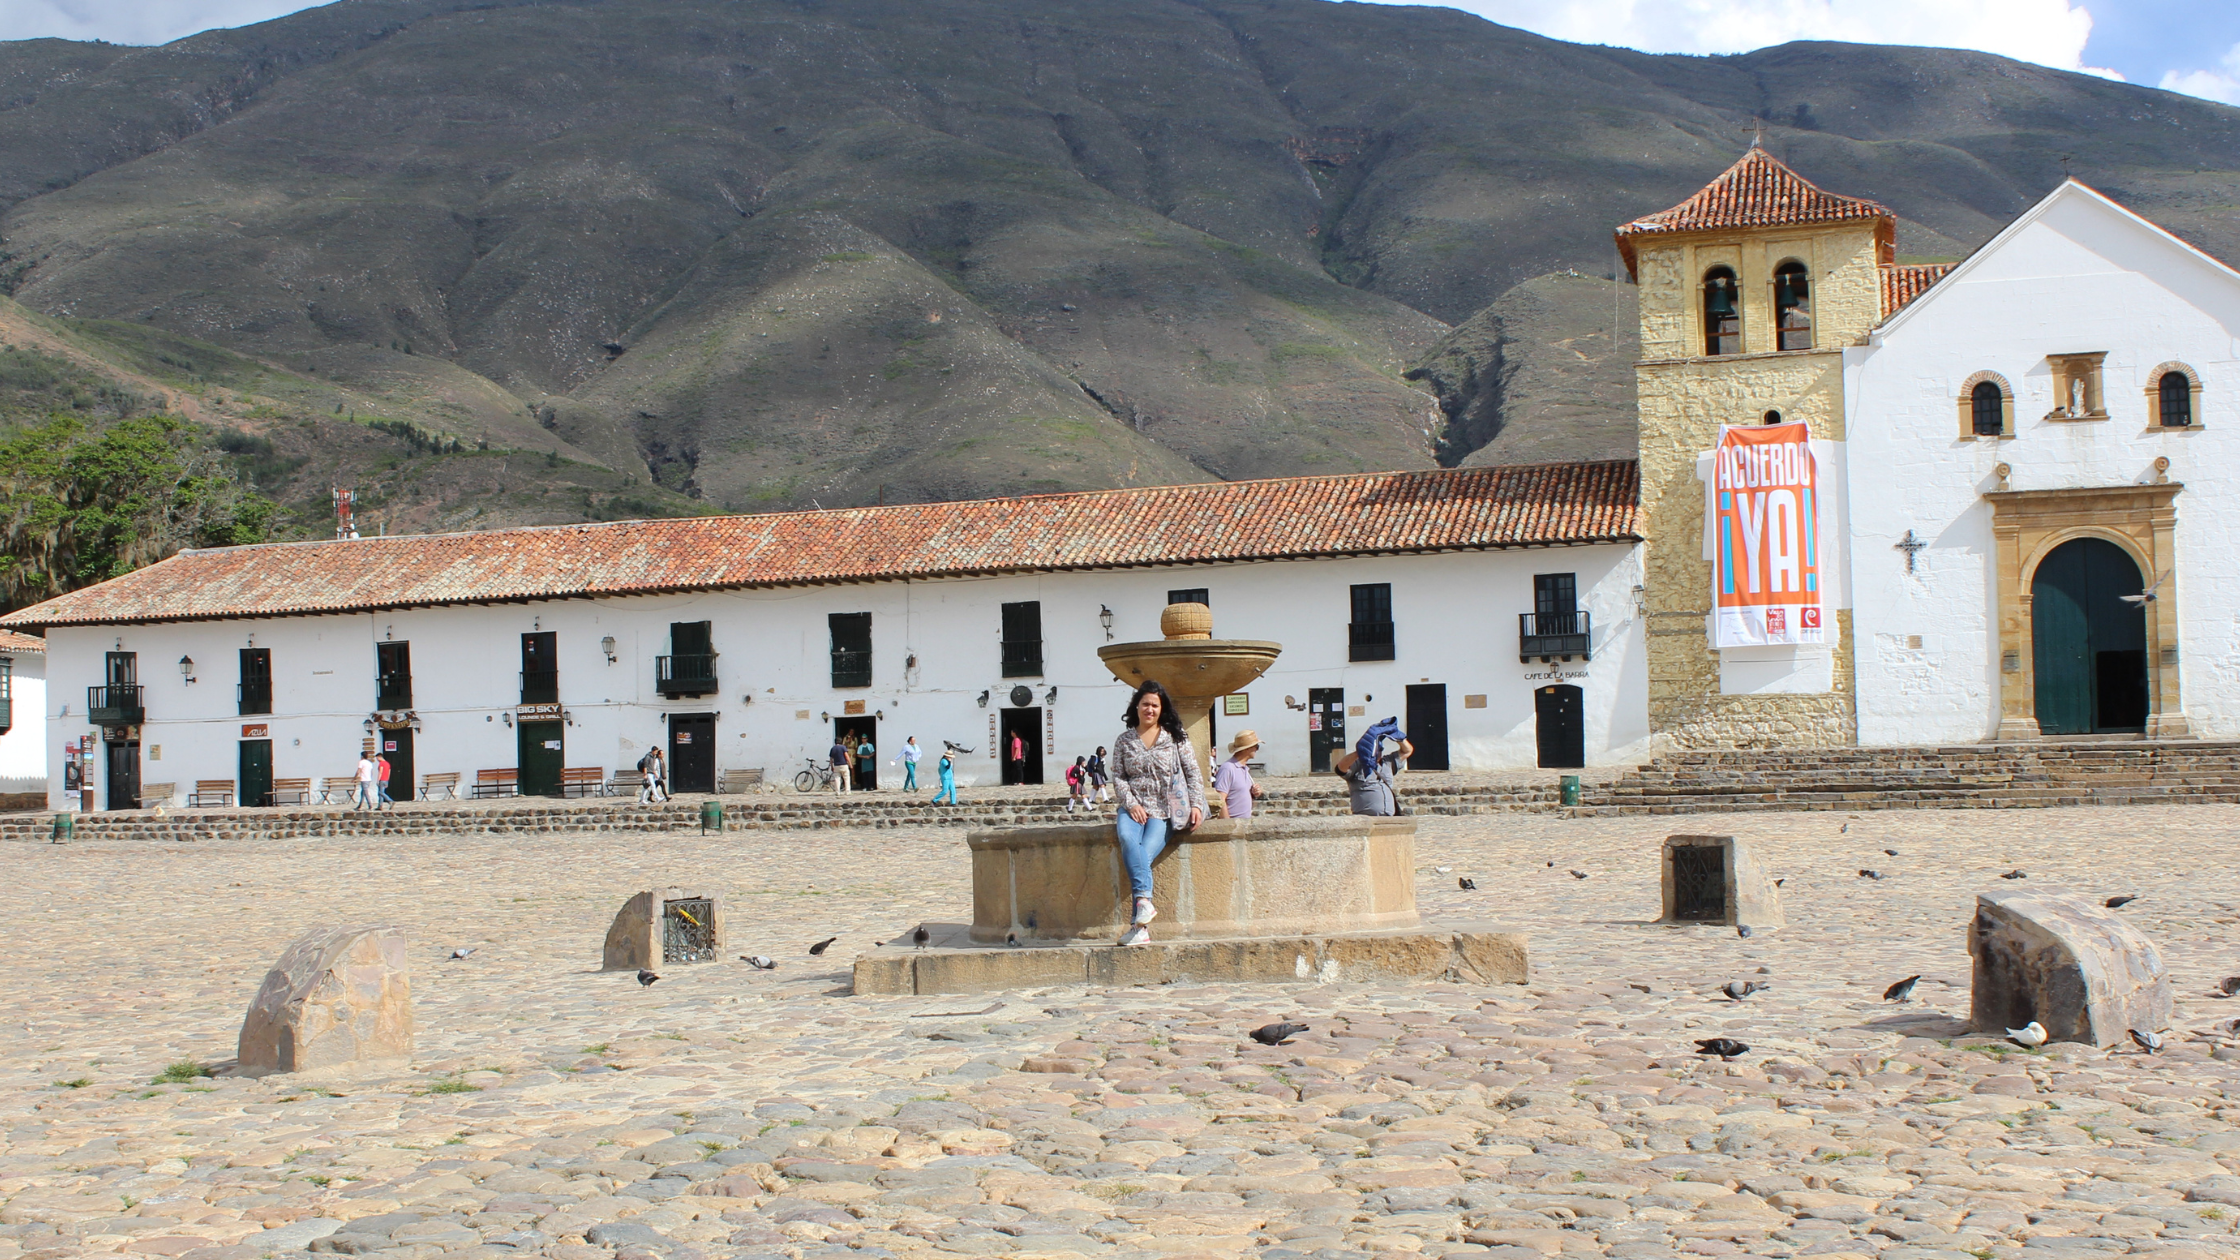 Dorfplatz von Villa de Leyva in Kolumbien